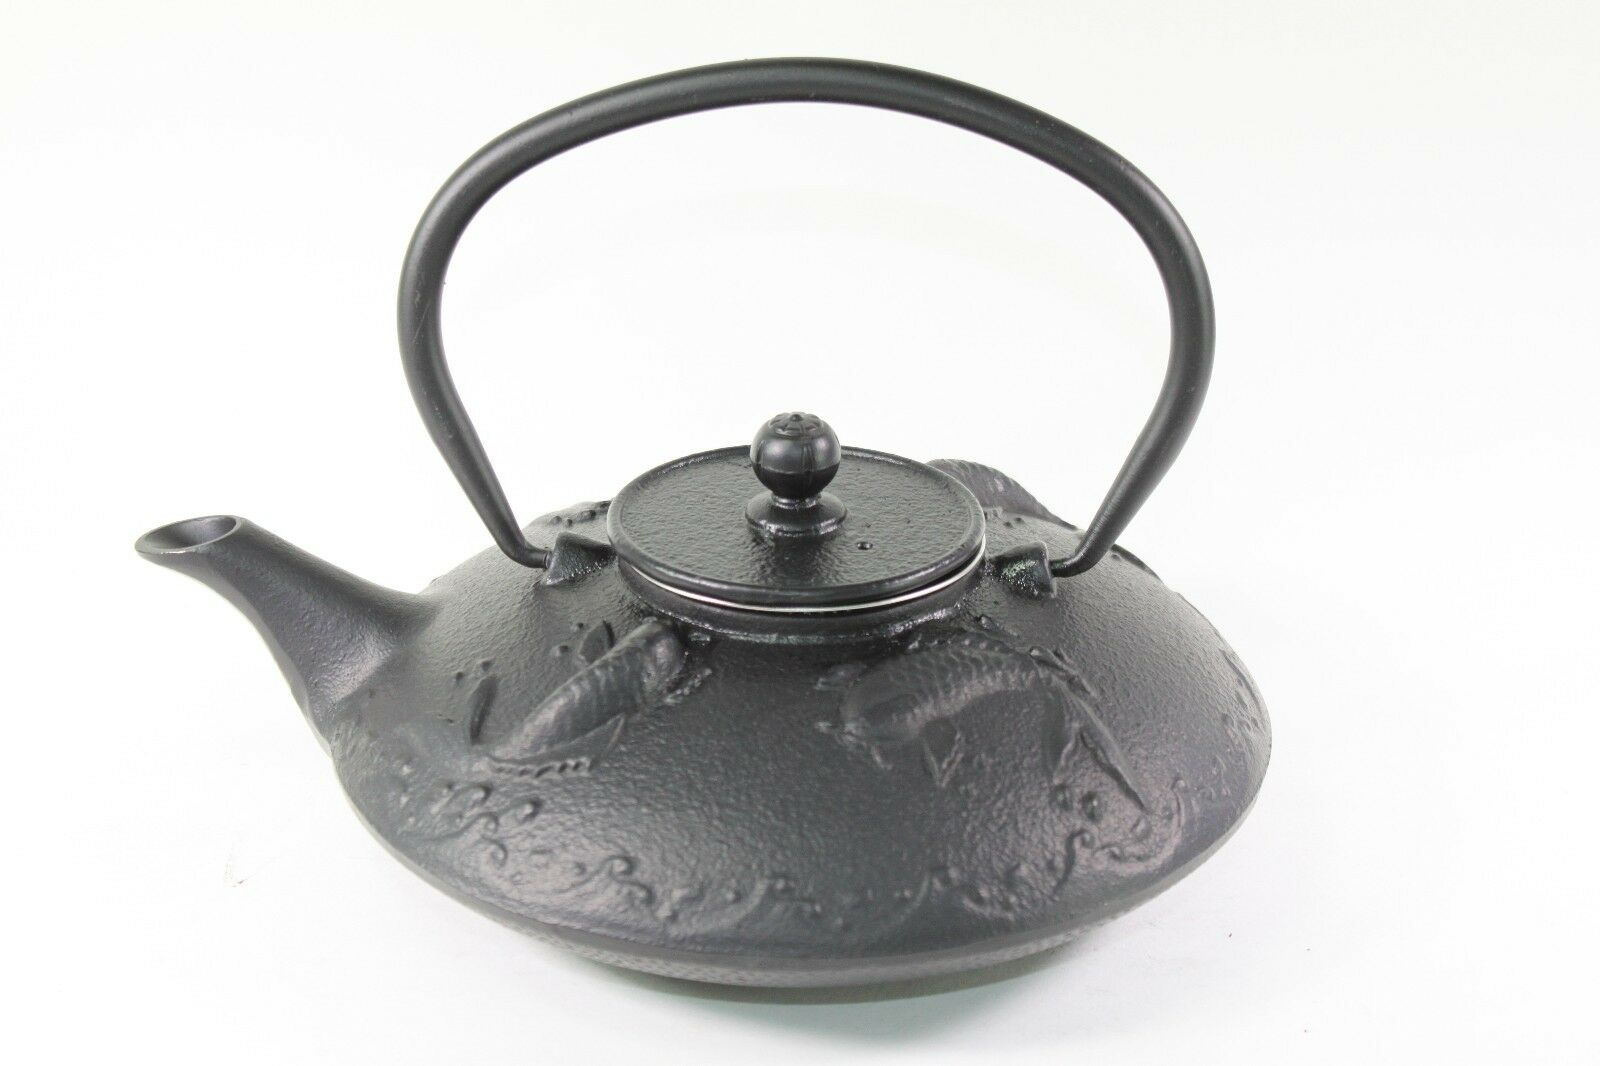 24 fl oz Black Fancy Carp Fish (Koi) Japanese Cast Iron Teapot + Infuser Filter F15591 - image 2 of 3